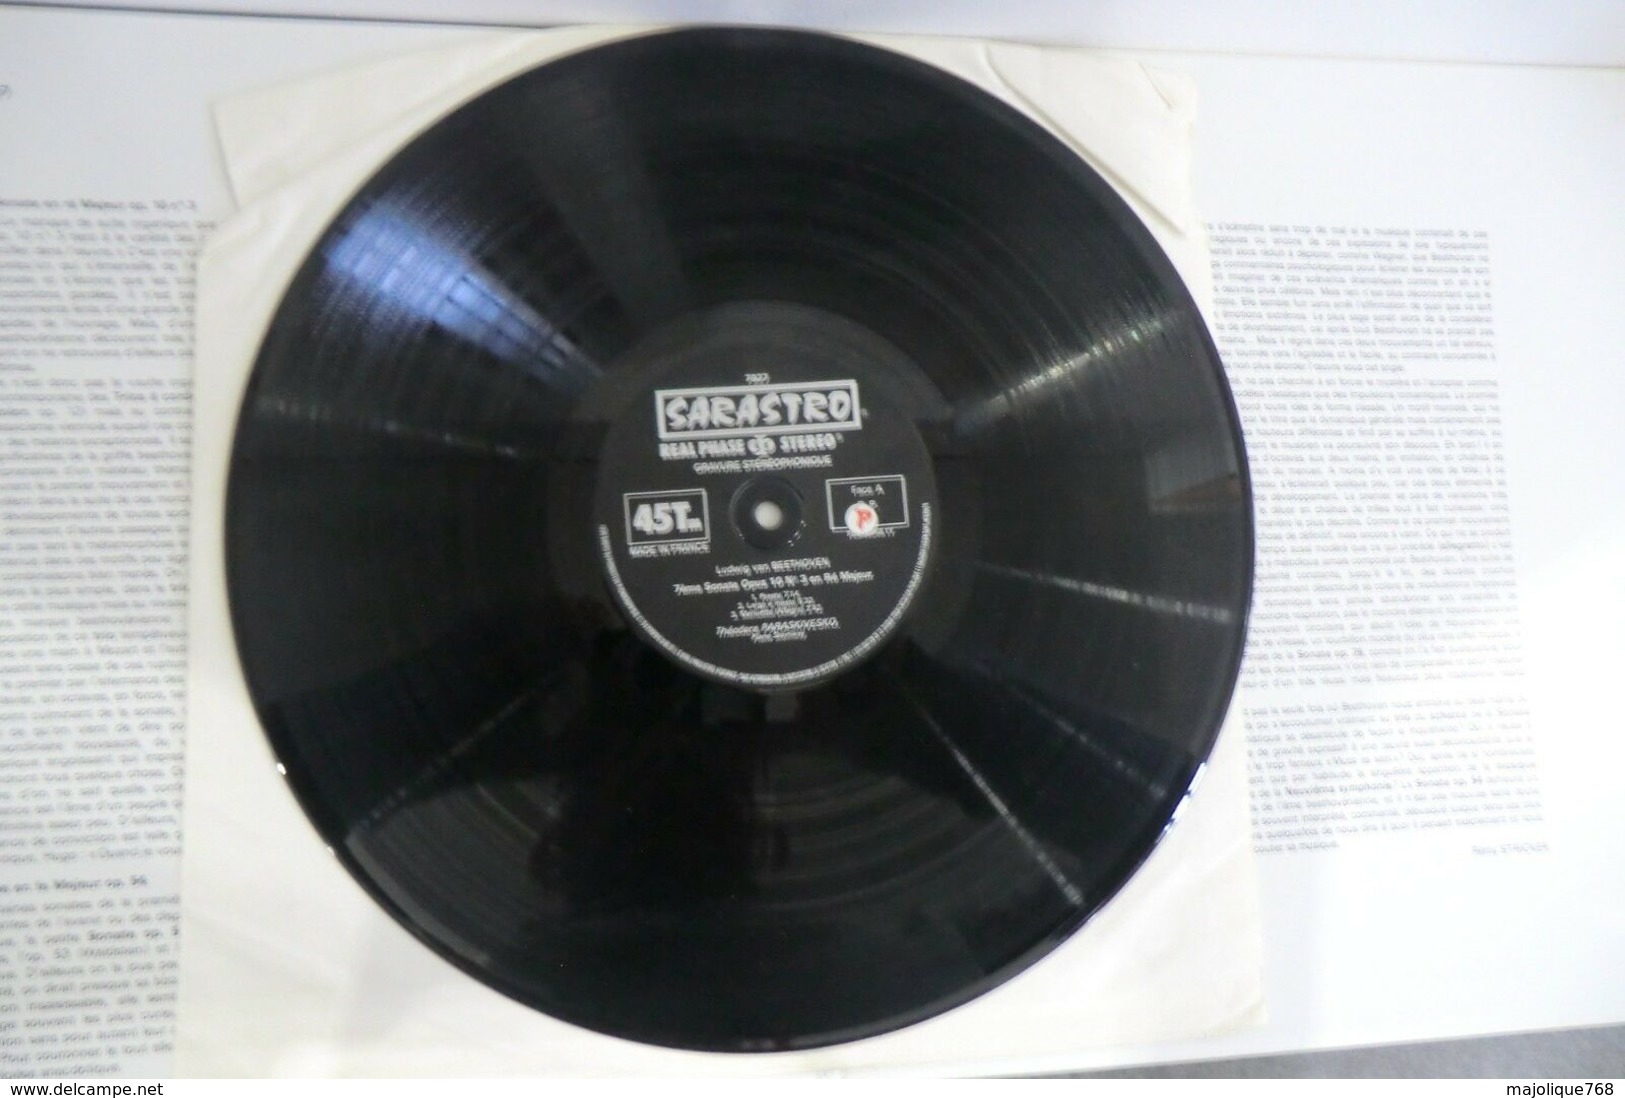 disque-Théodore paraskivesco - sonate N°7 opus de beethoven - sarastro sar 7927 - 45 LP - 1978 sous plastique -